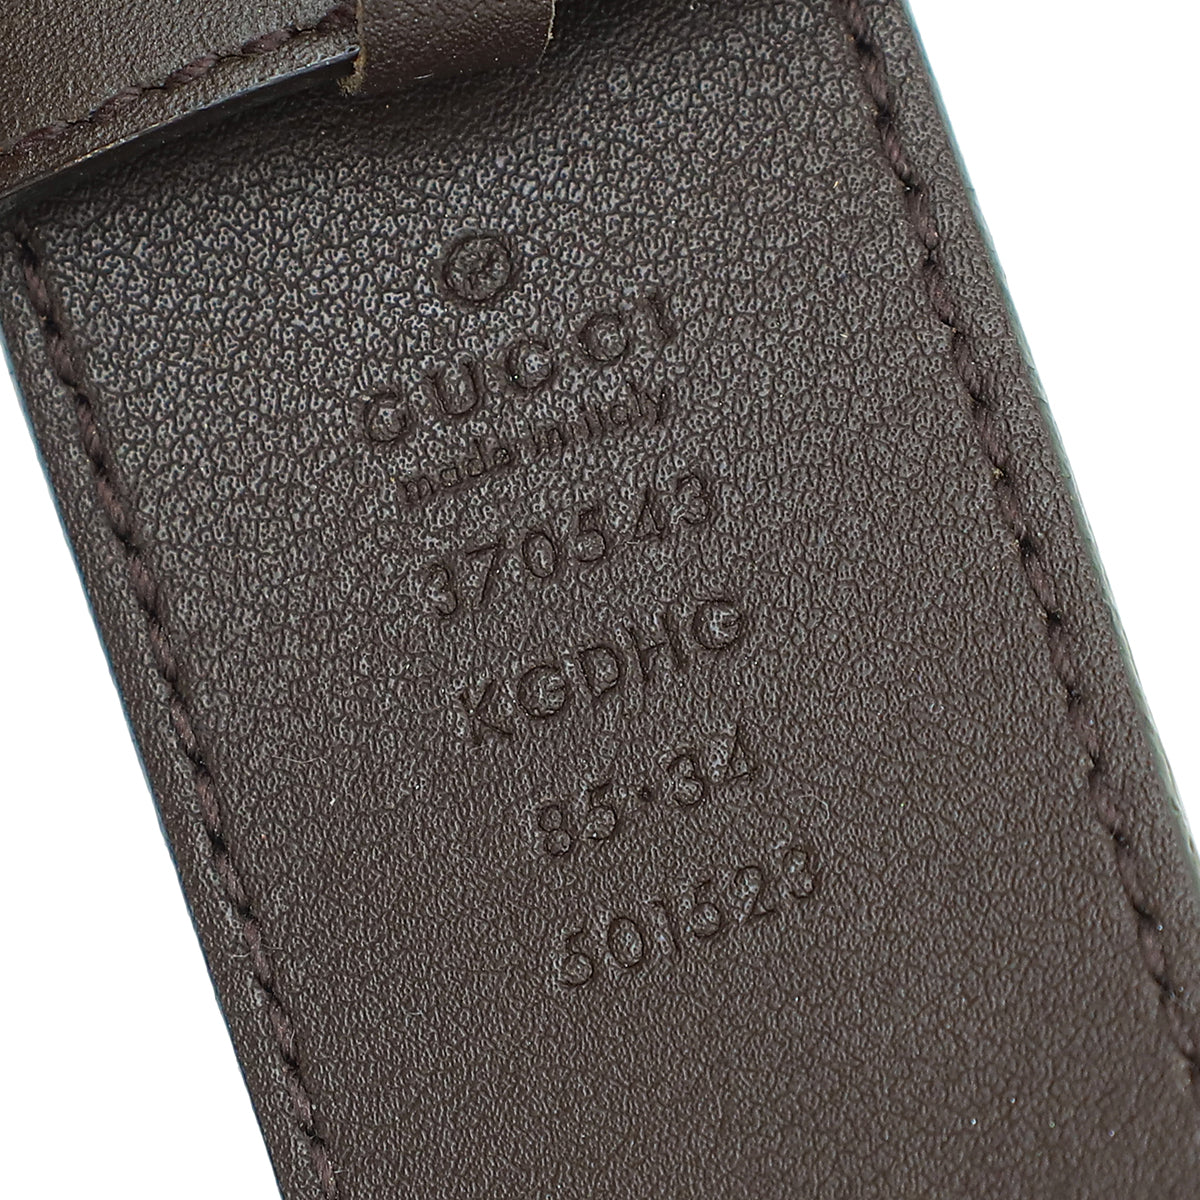 Gucci Bicolor GG Supreme Interlocking G Belt 34